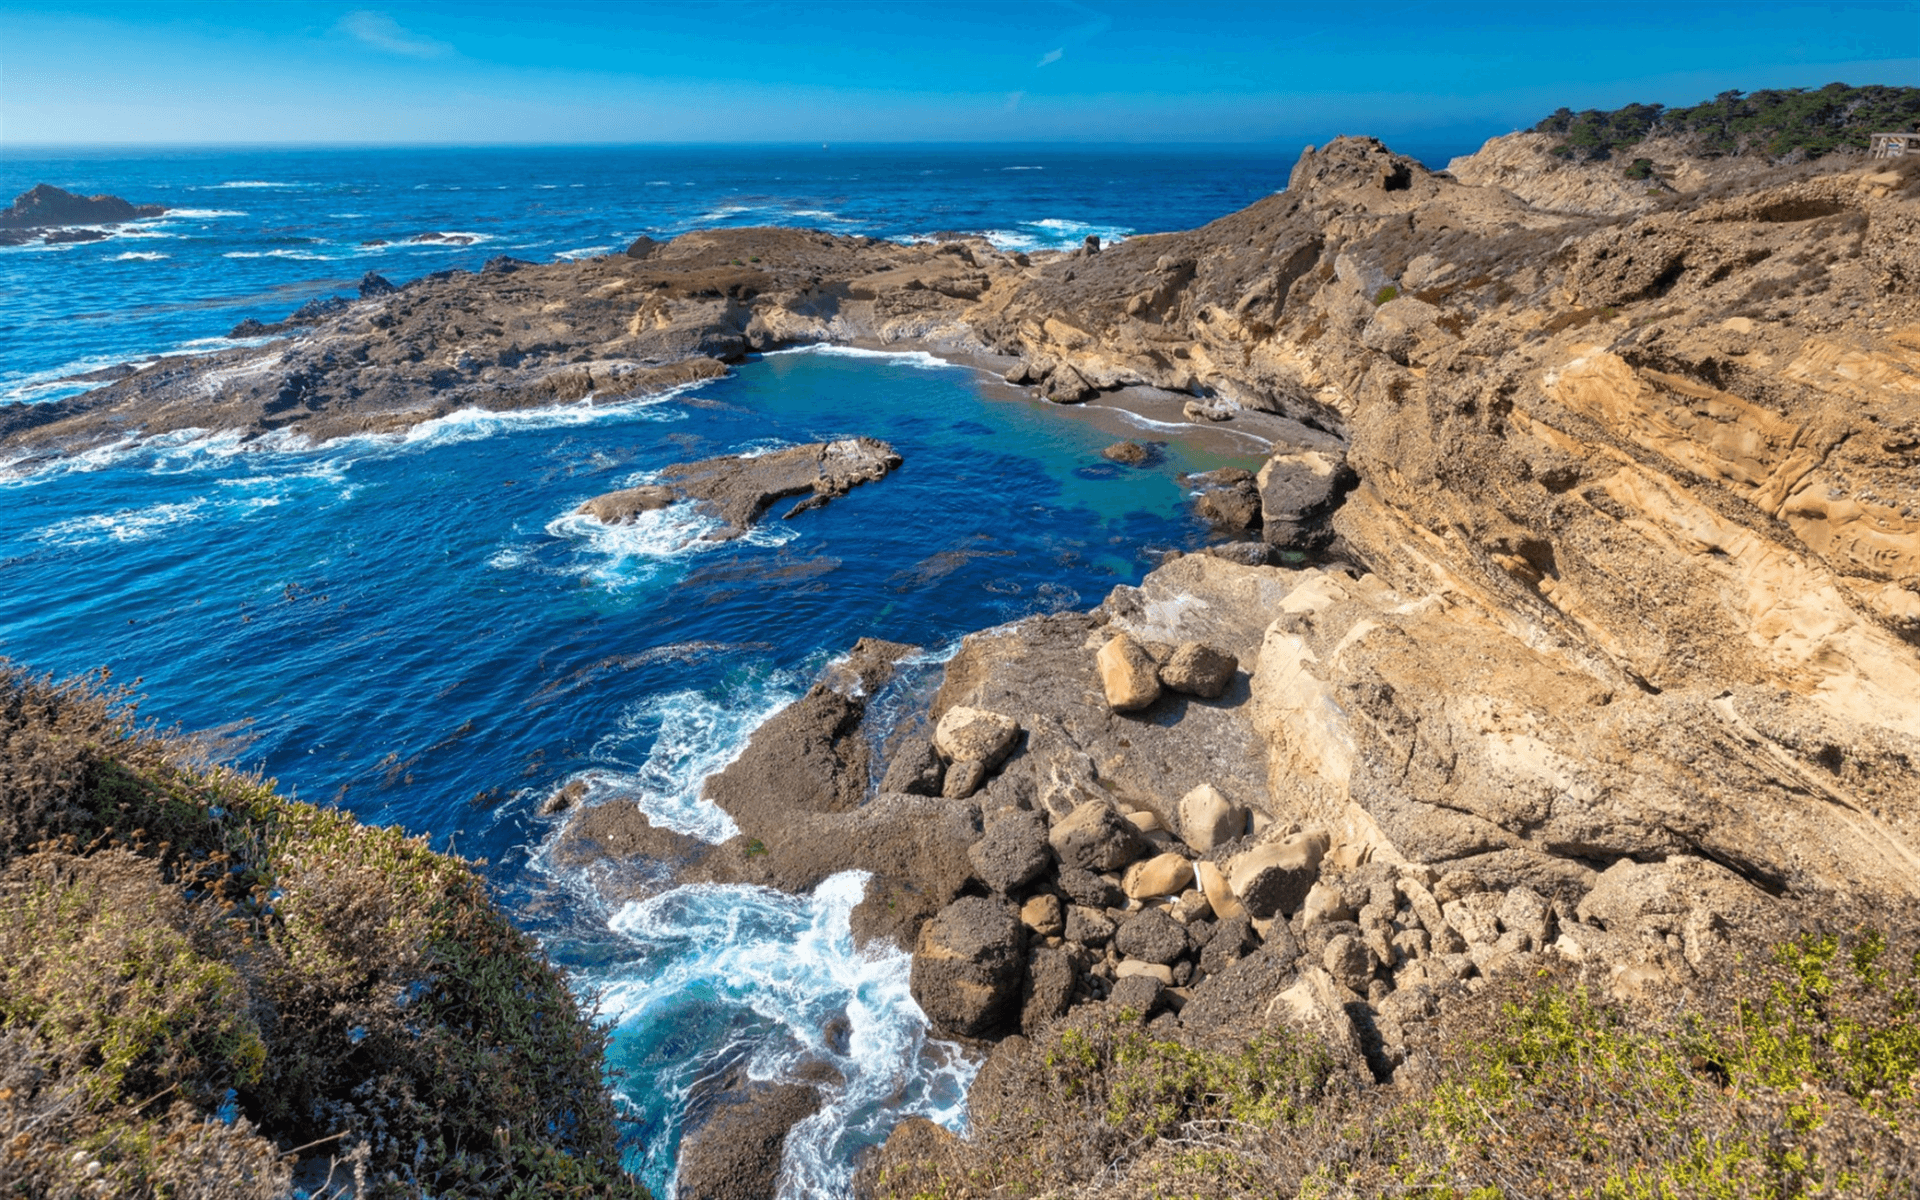 Download wallpaper Pacific Ocean, rocky coast, rocks, waves, bay